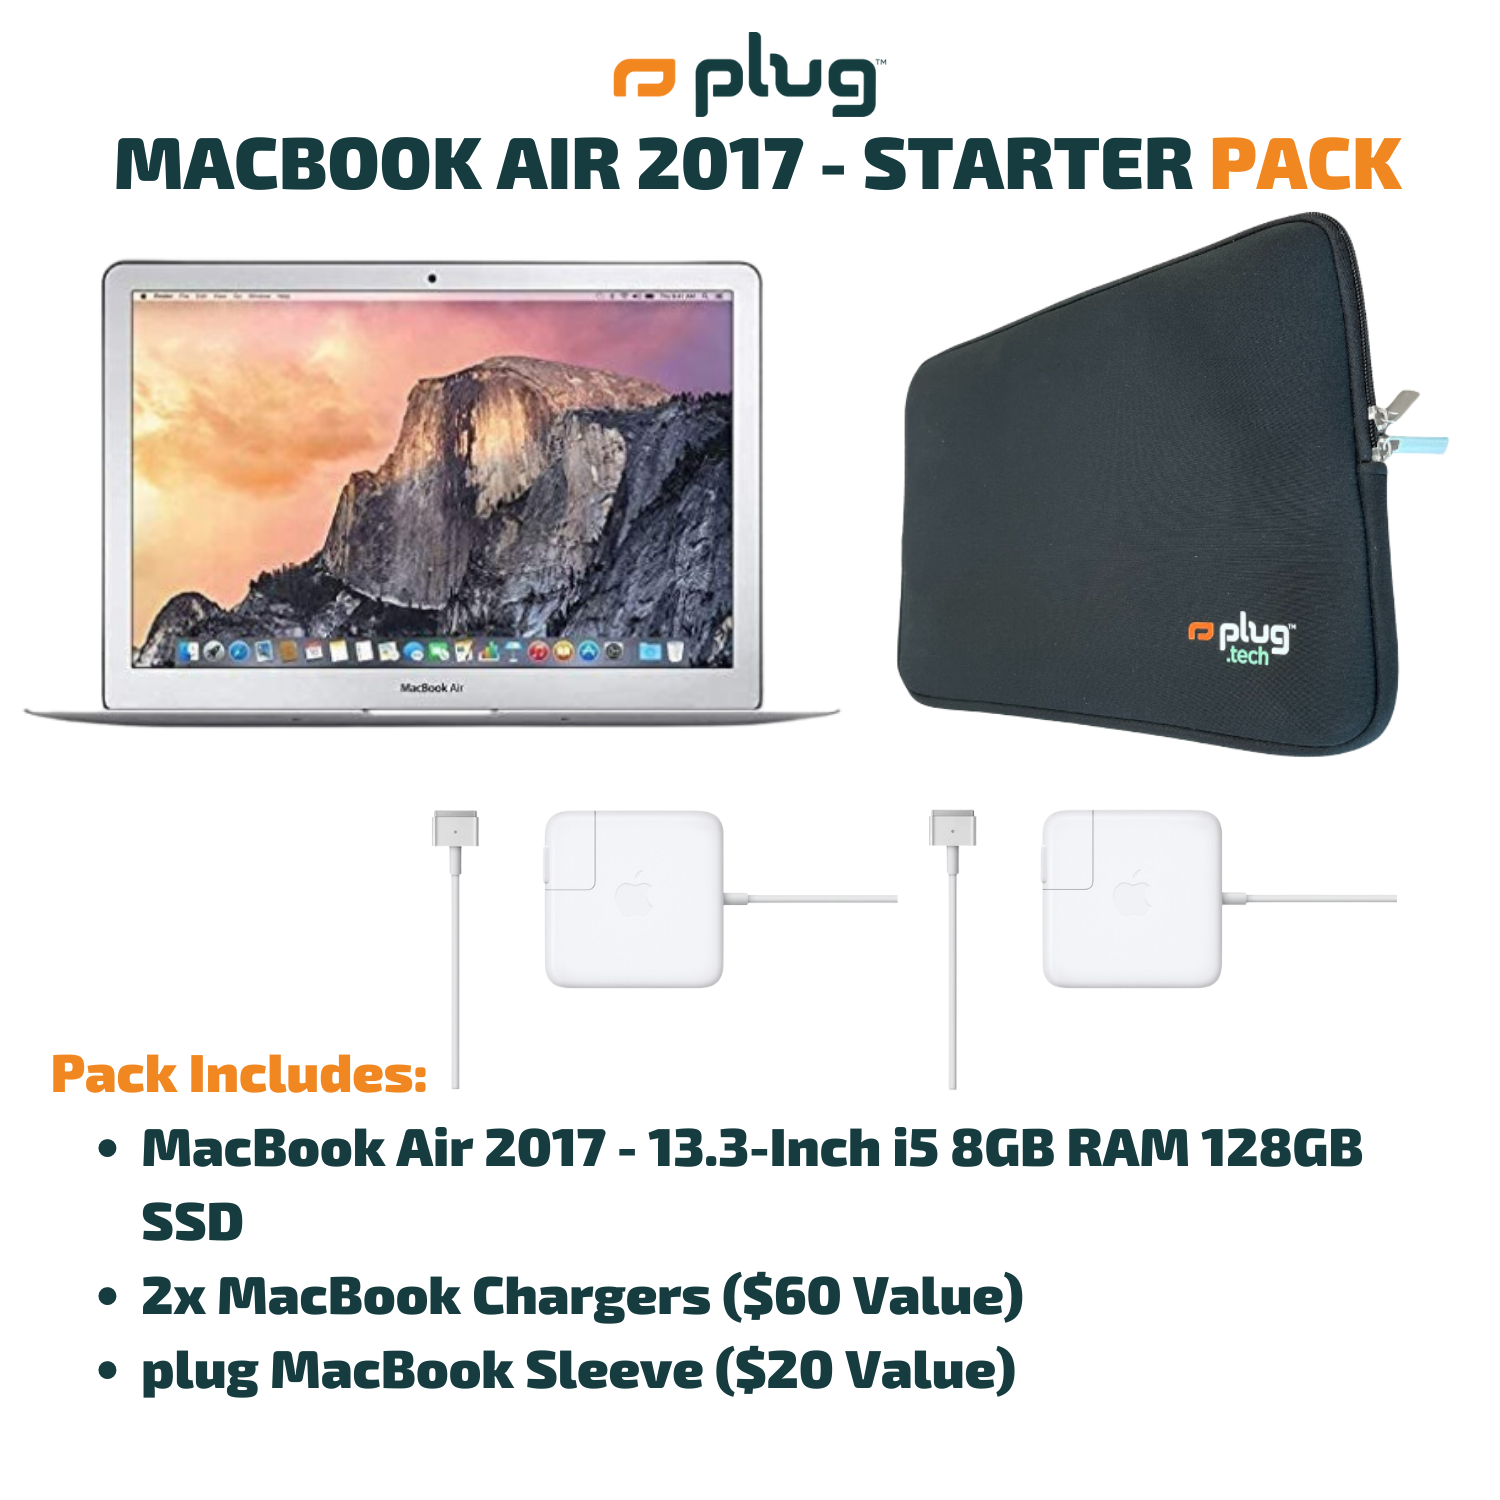 MacBook Air 2017 - Starter Pack